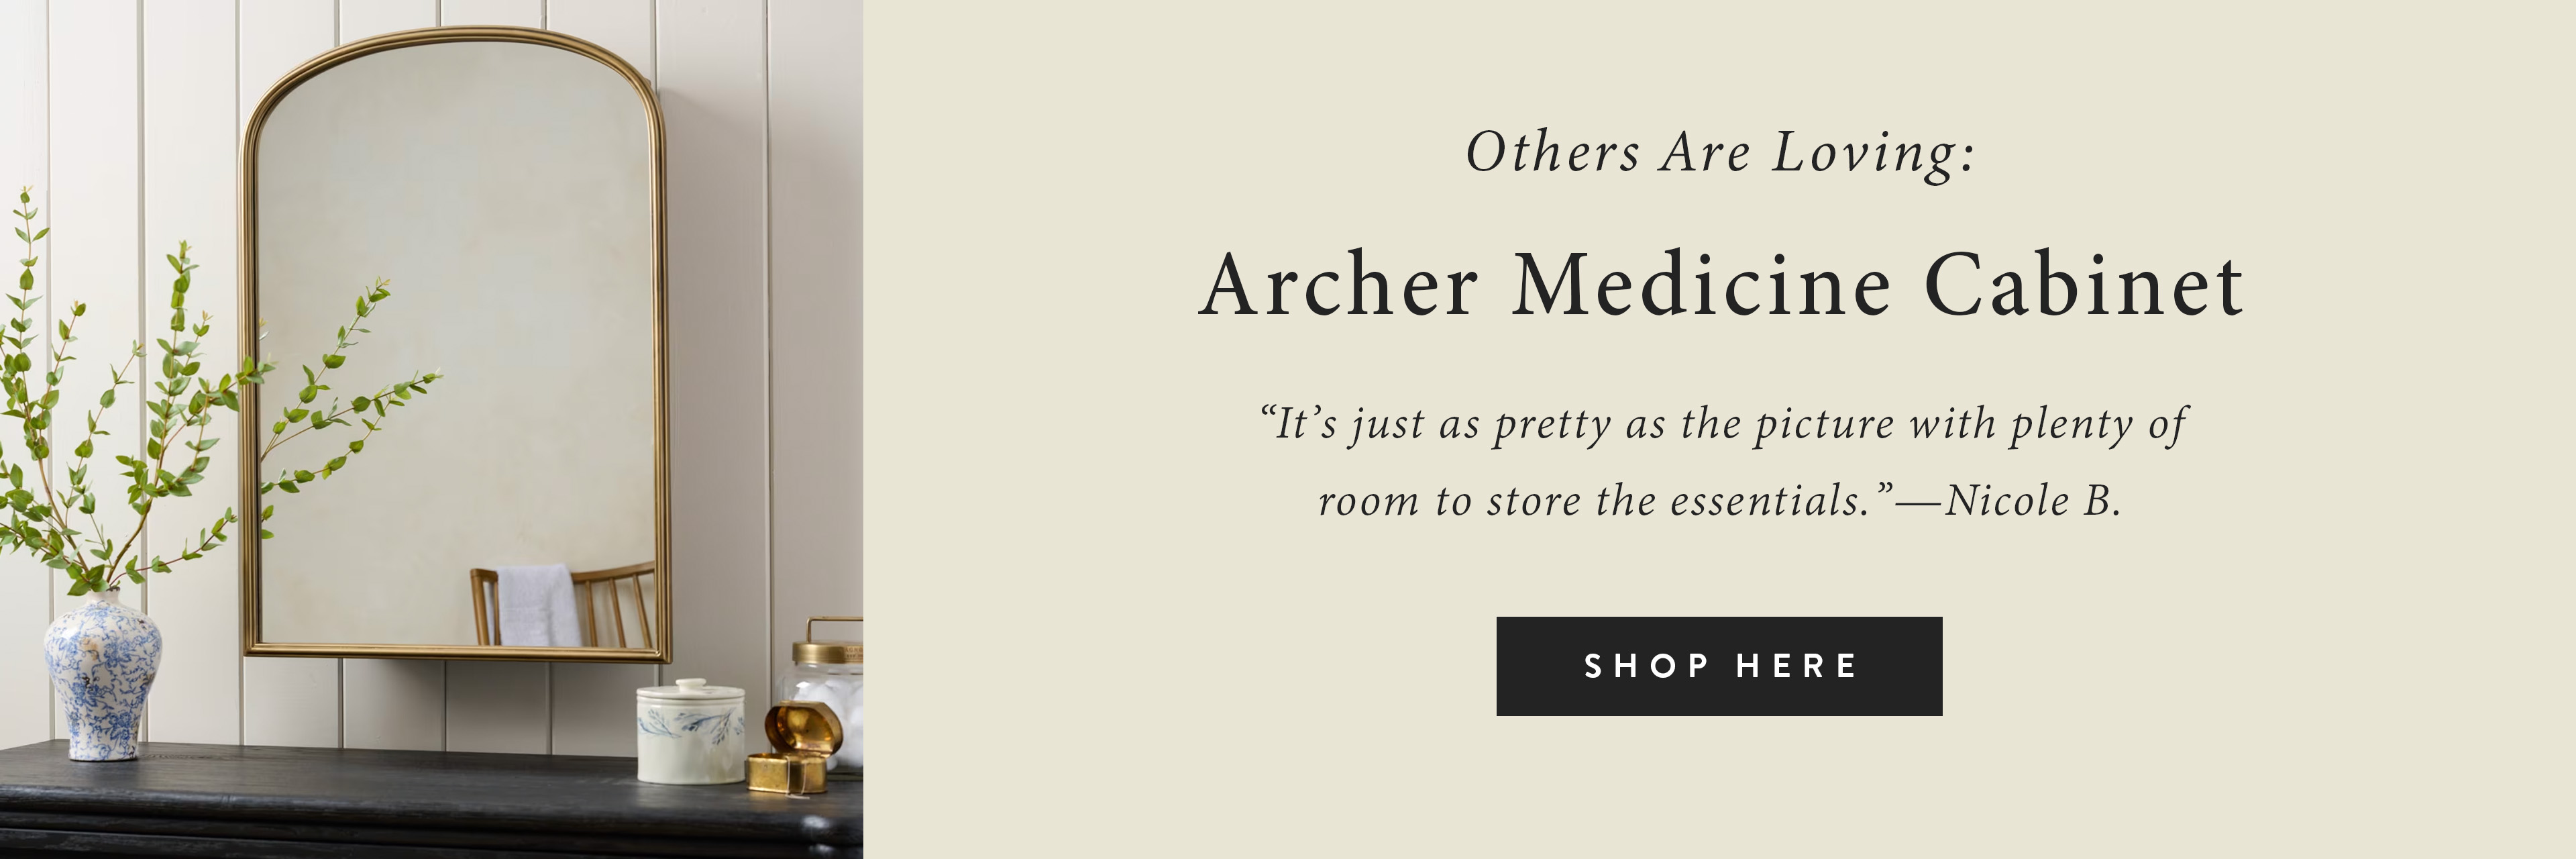 Archer Medicine